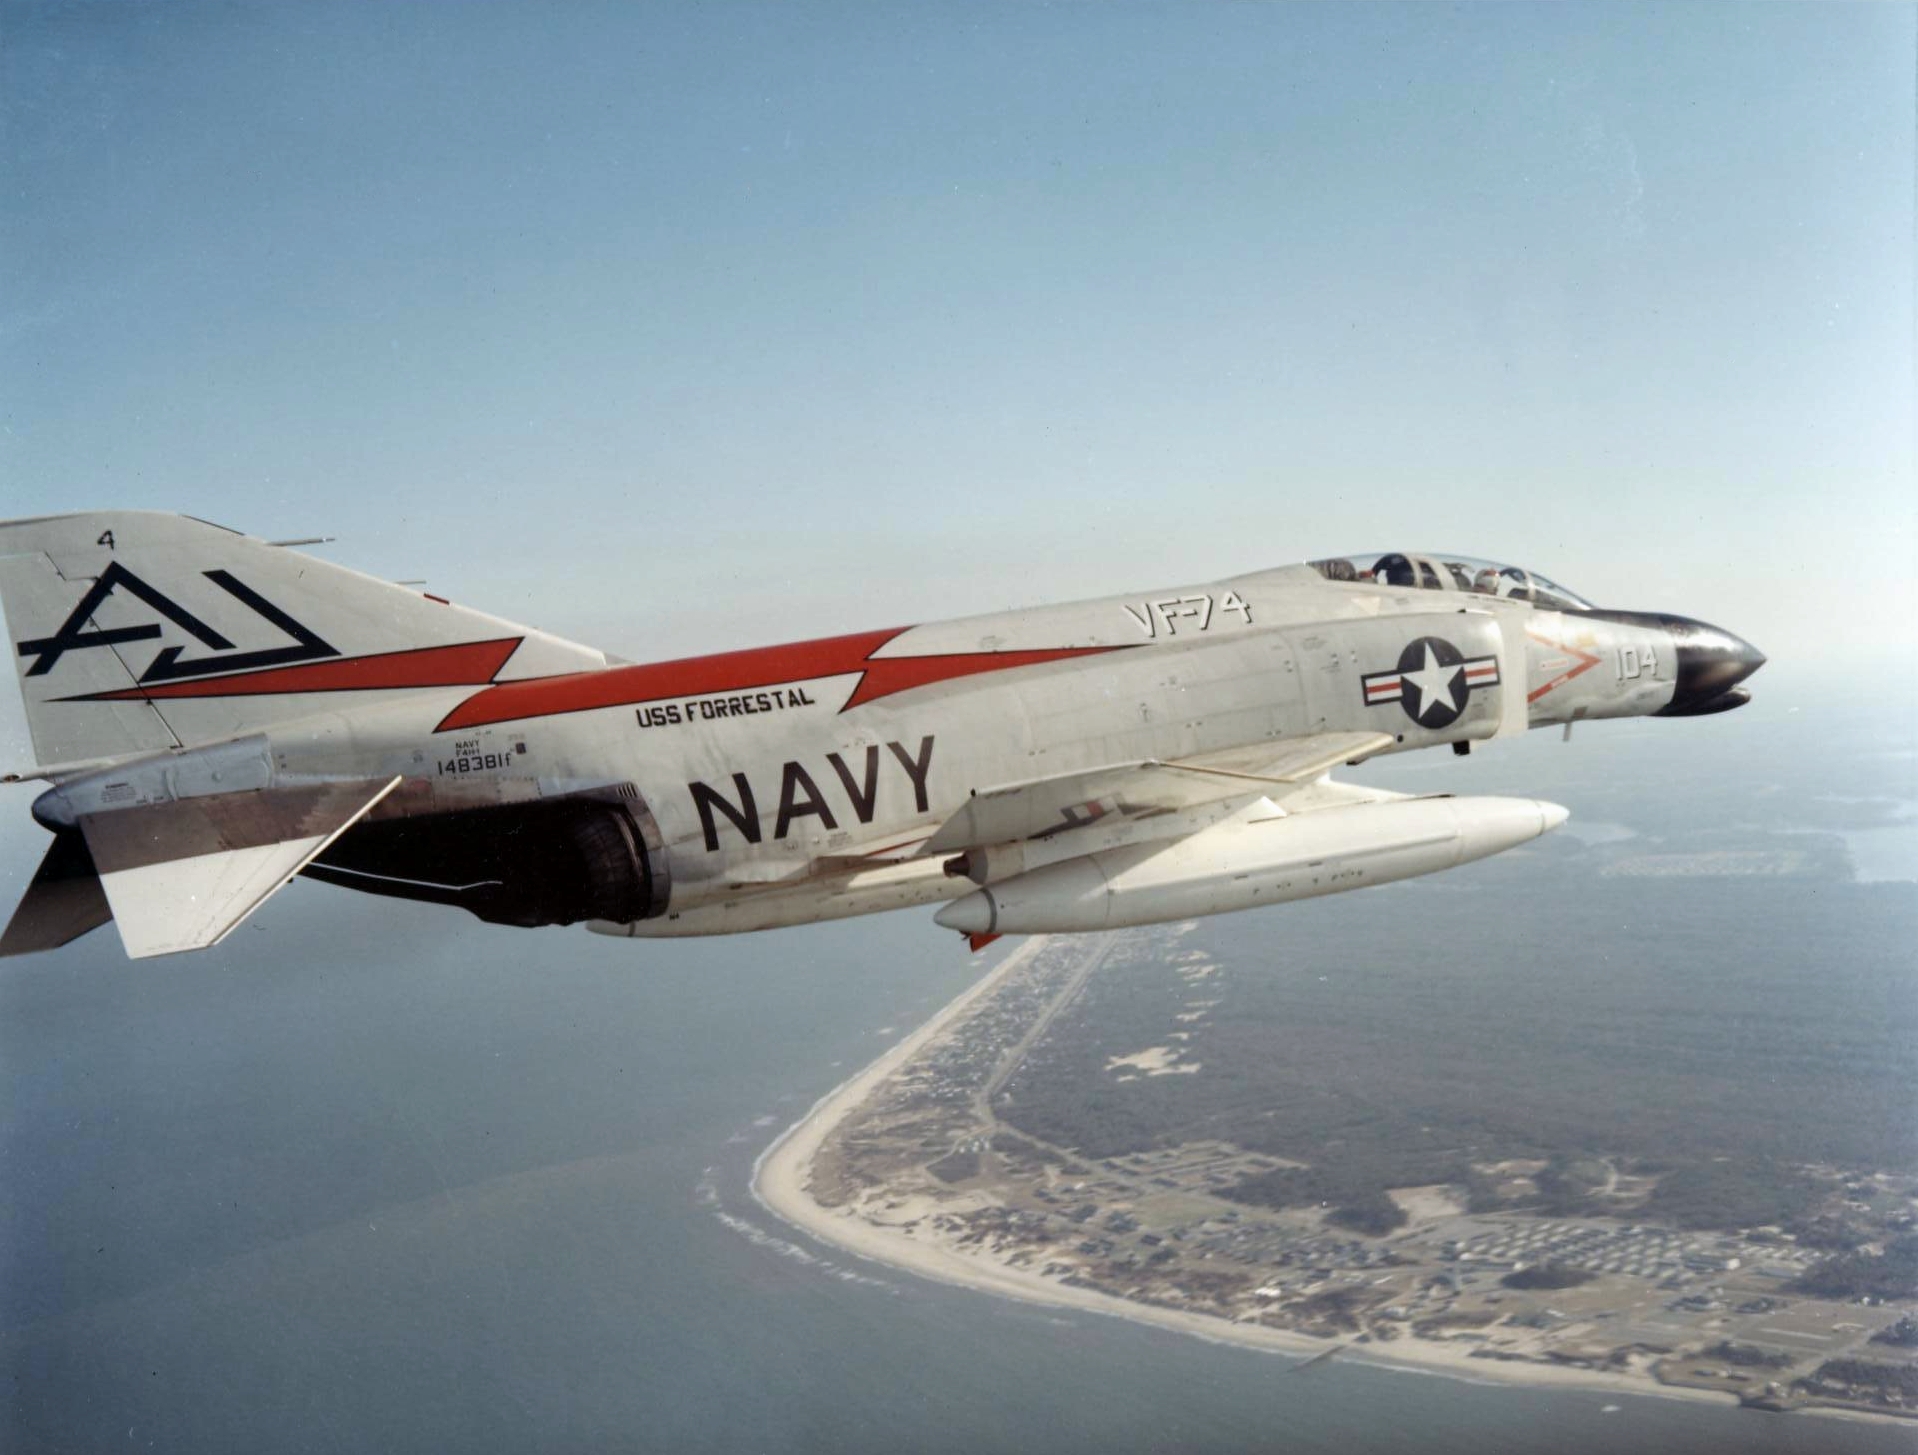 McDonnell F-4B Phantom II Bu. No. 148381 of VF-74, assigned to USS Forrestal (CV-59). (United States Navy)